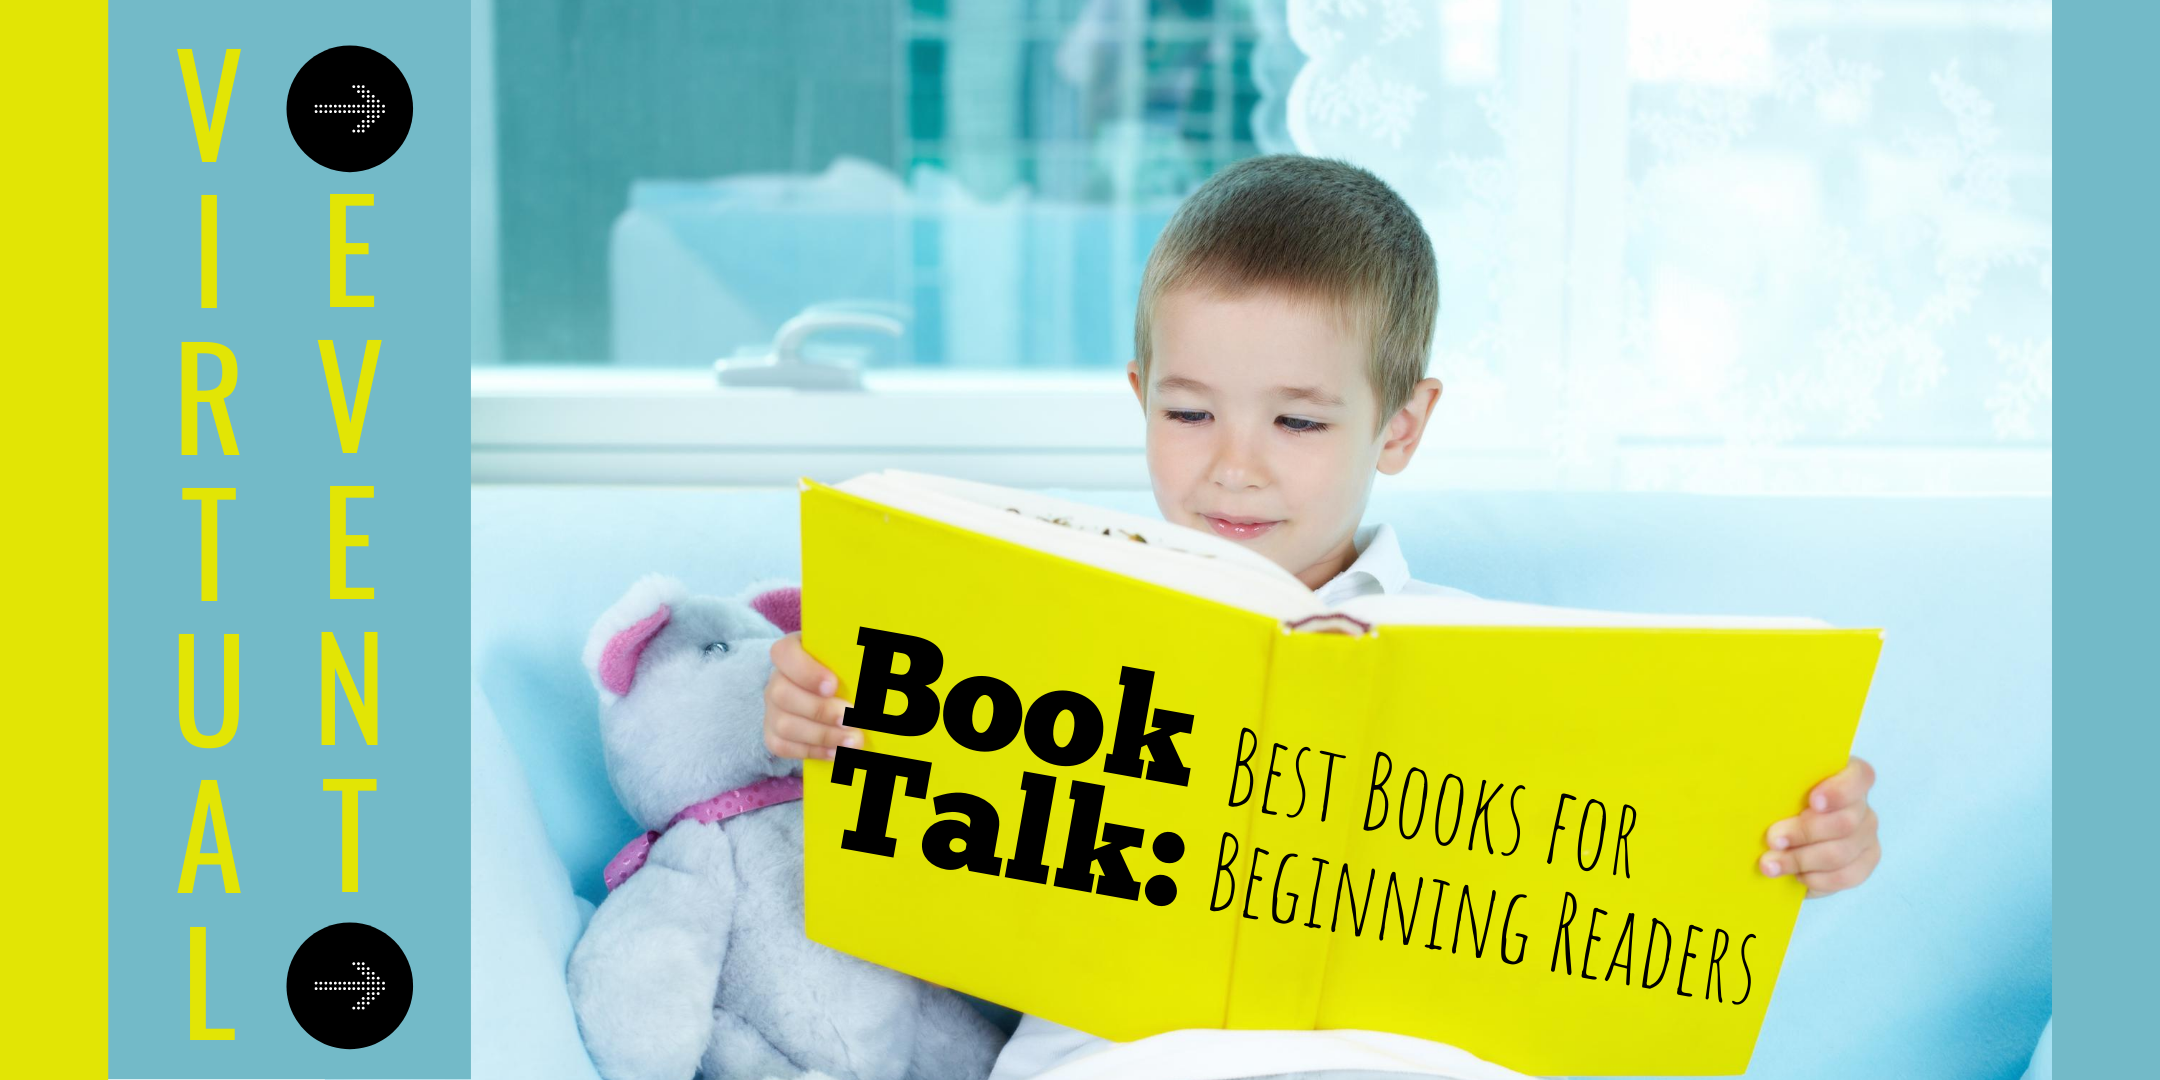 Book Talk: Best Books for Beginning Readers image